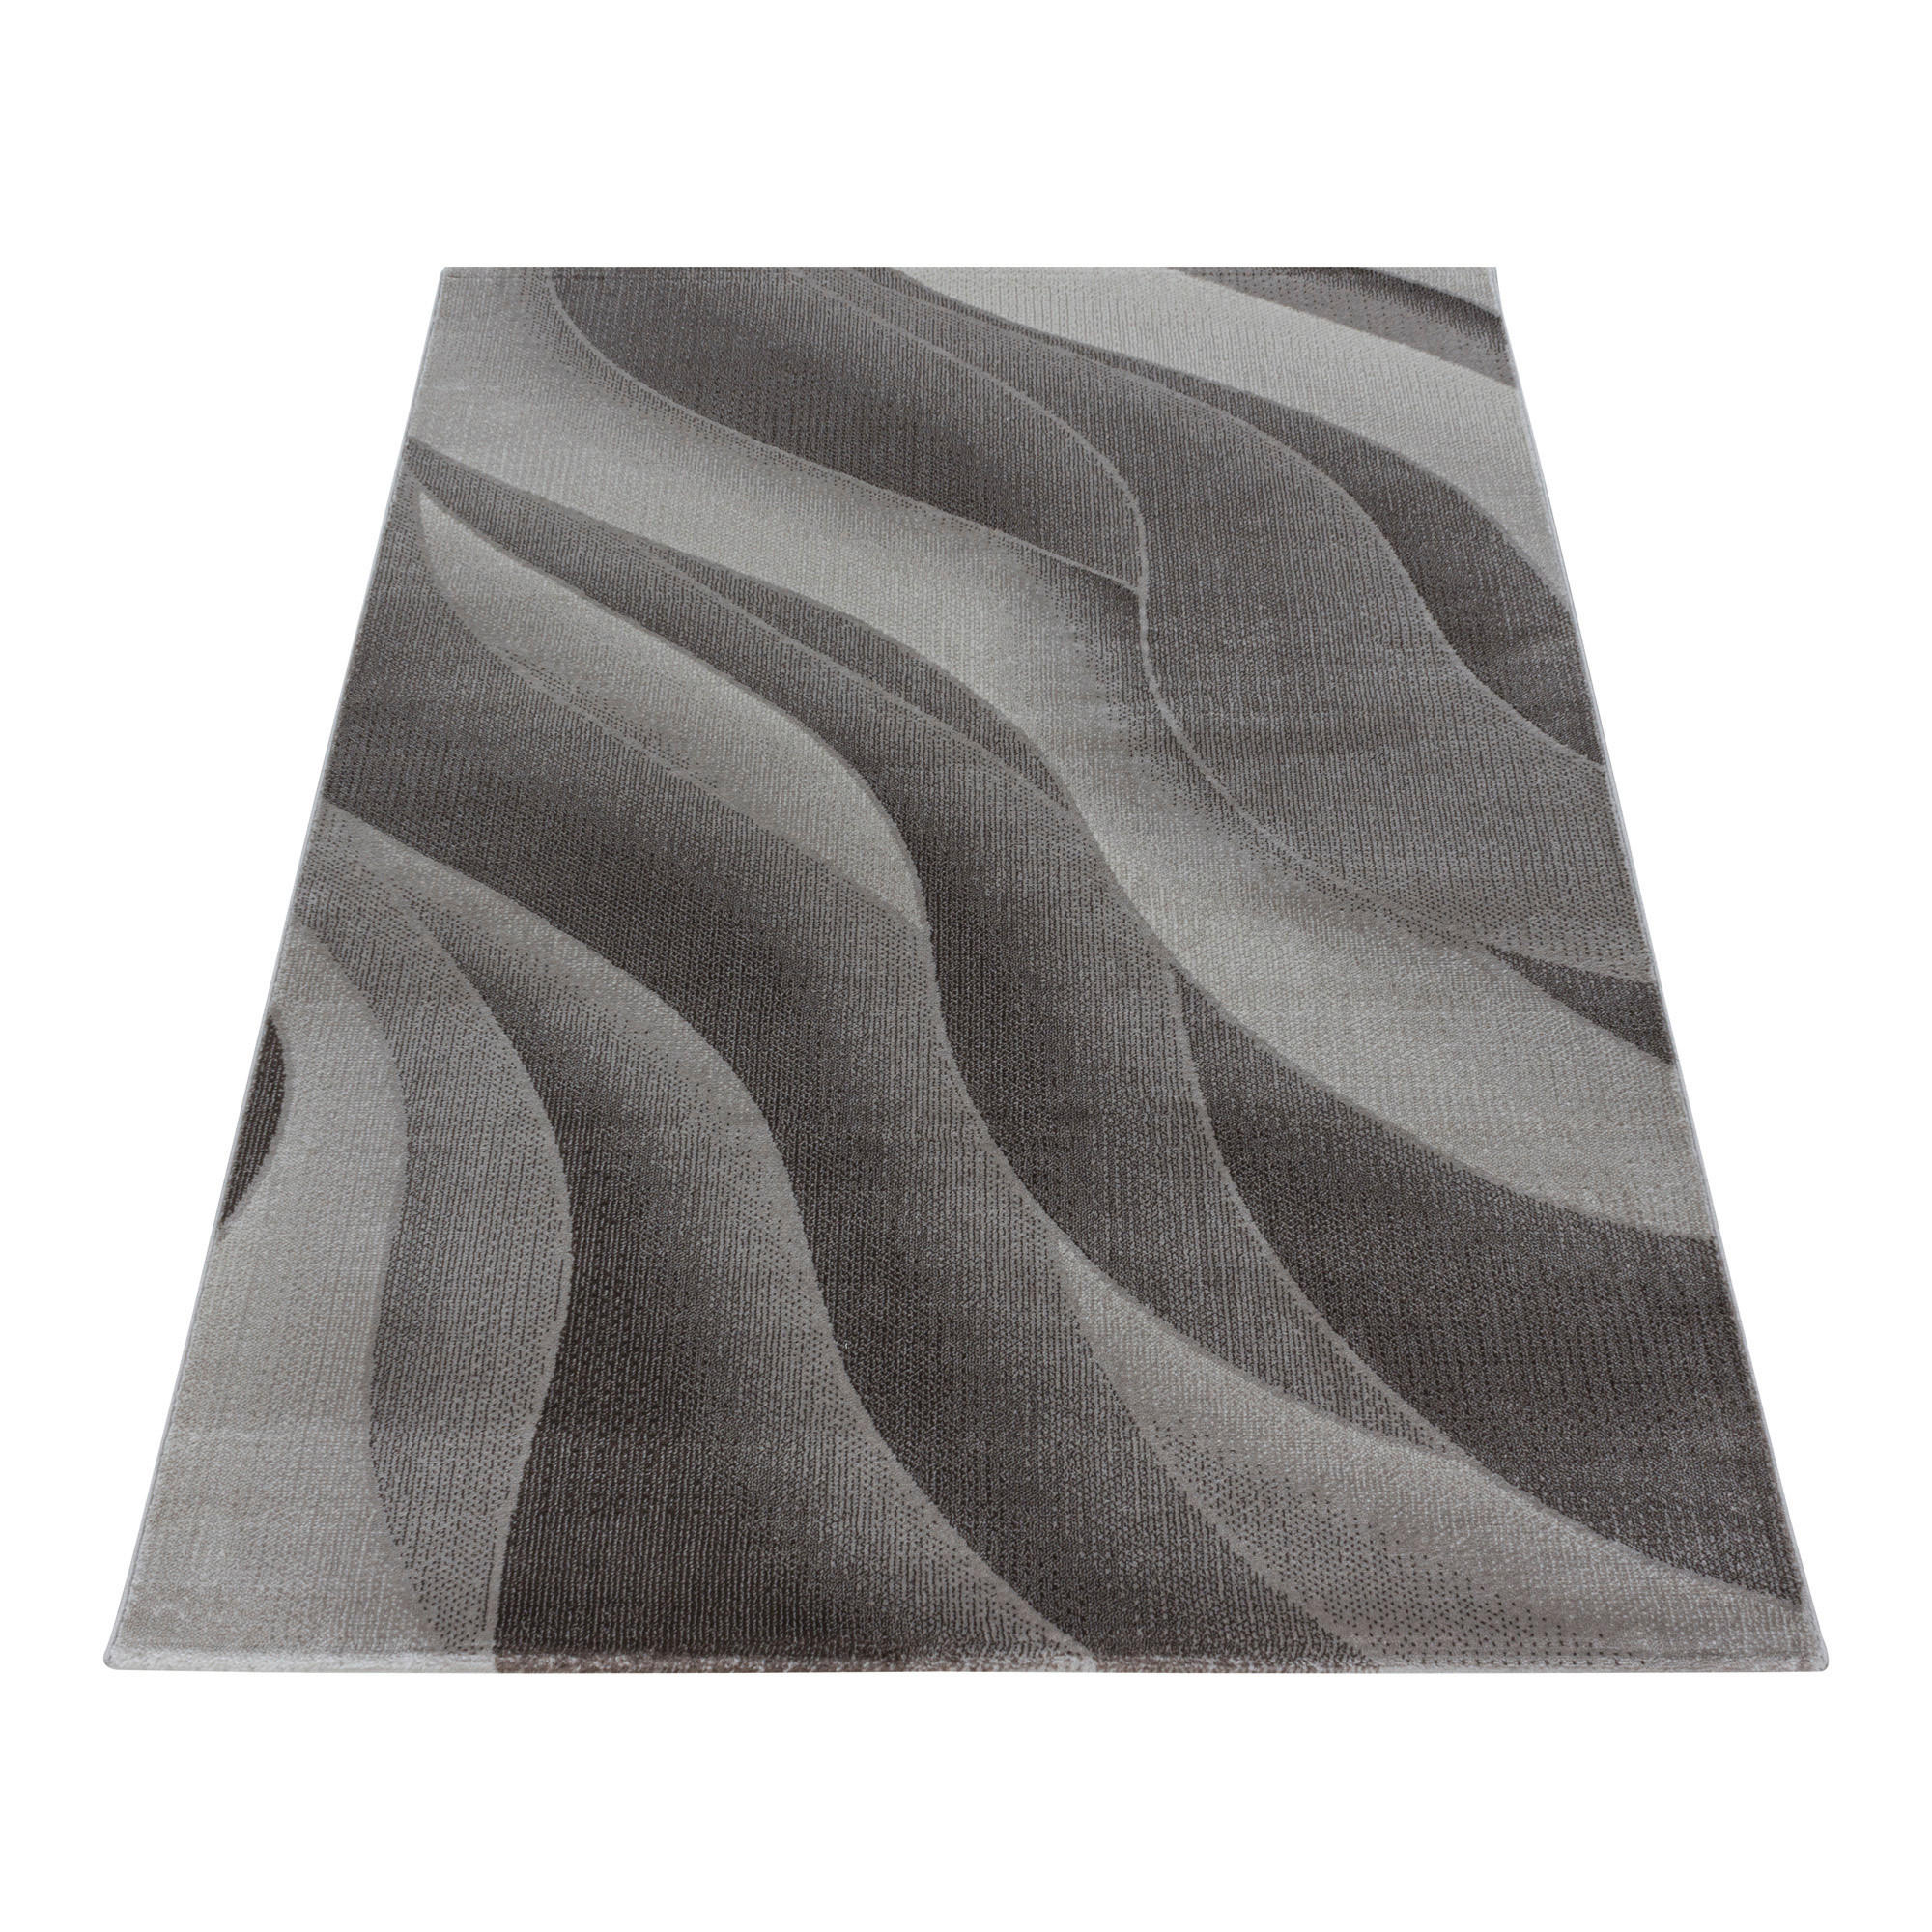 WEBTEPPICH  80/150 cm  Braun   - Braun, Design, Textil (80/150cm) - Novel